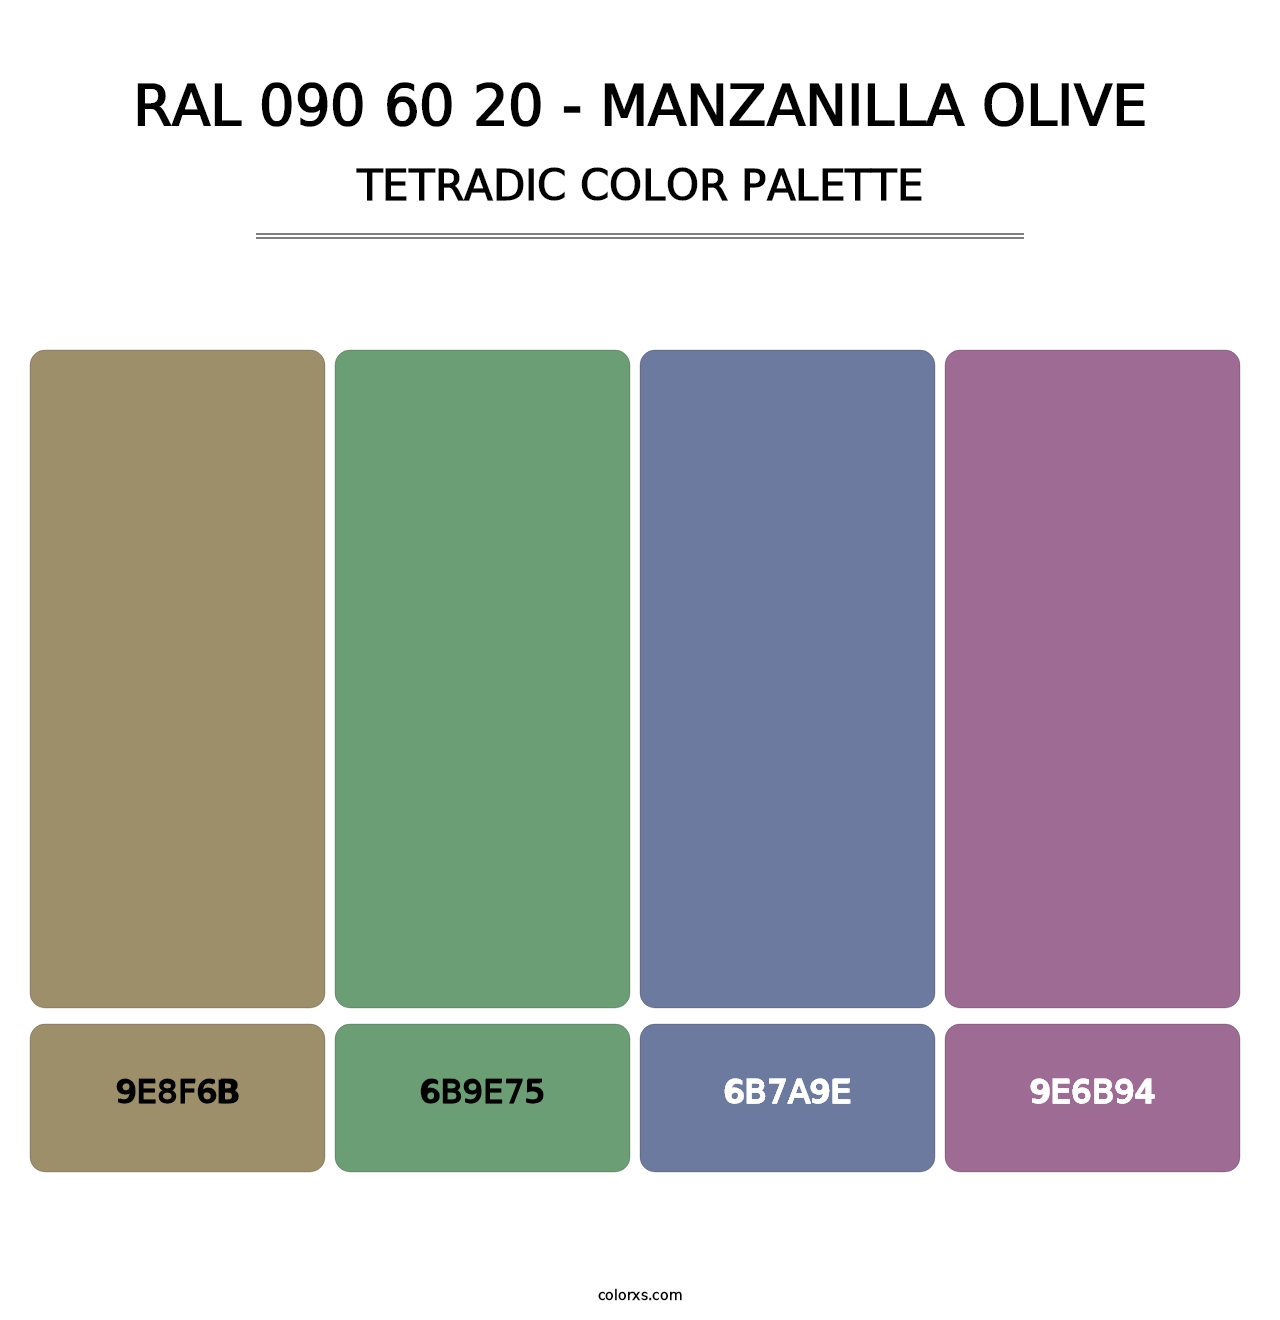 RAL 090 60 20 - Manzanilla Olive - Tetradic Color Palette